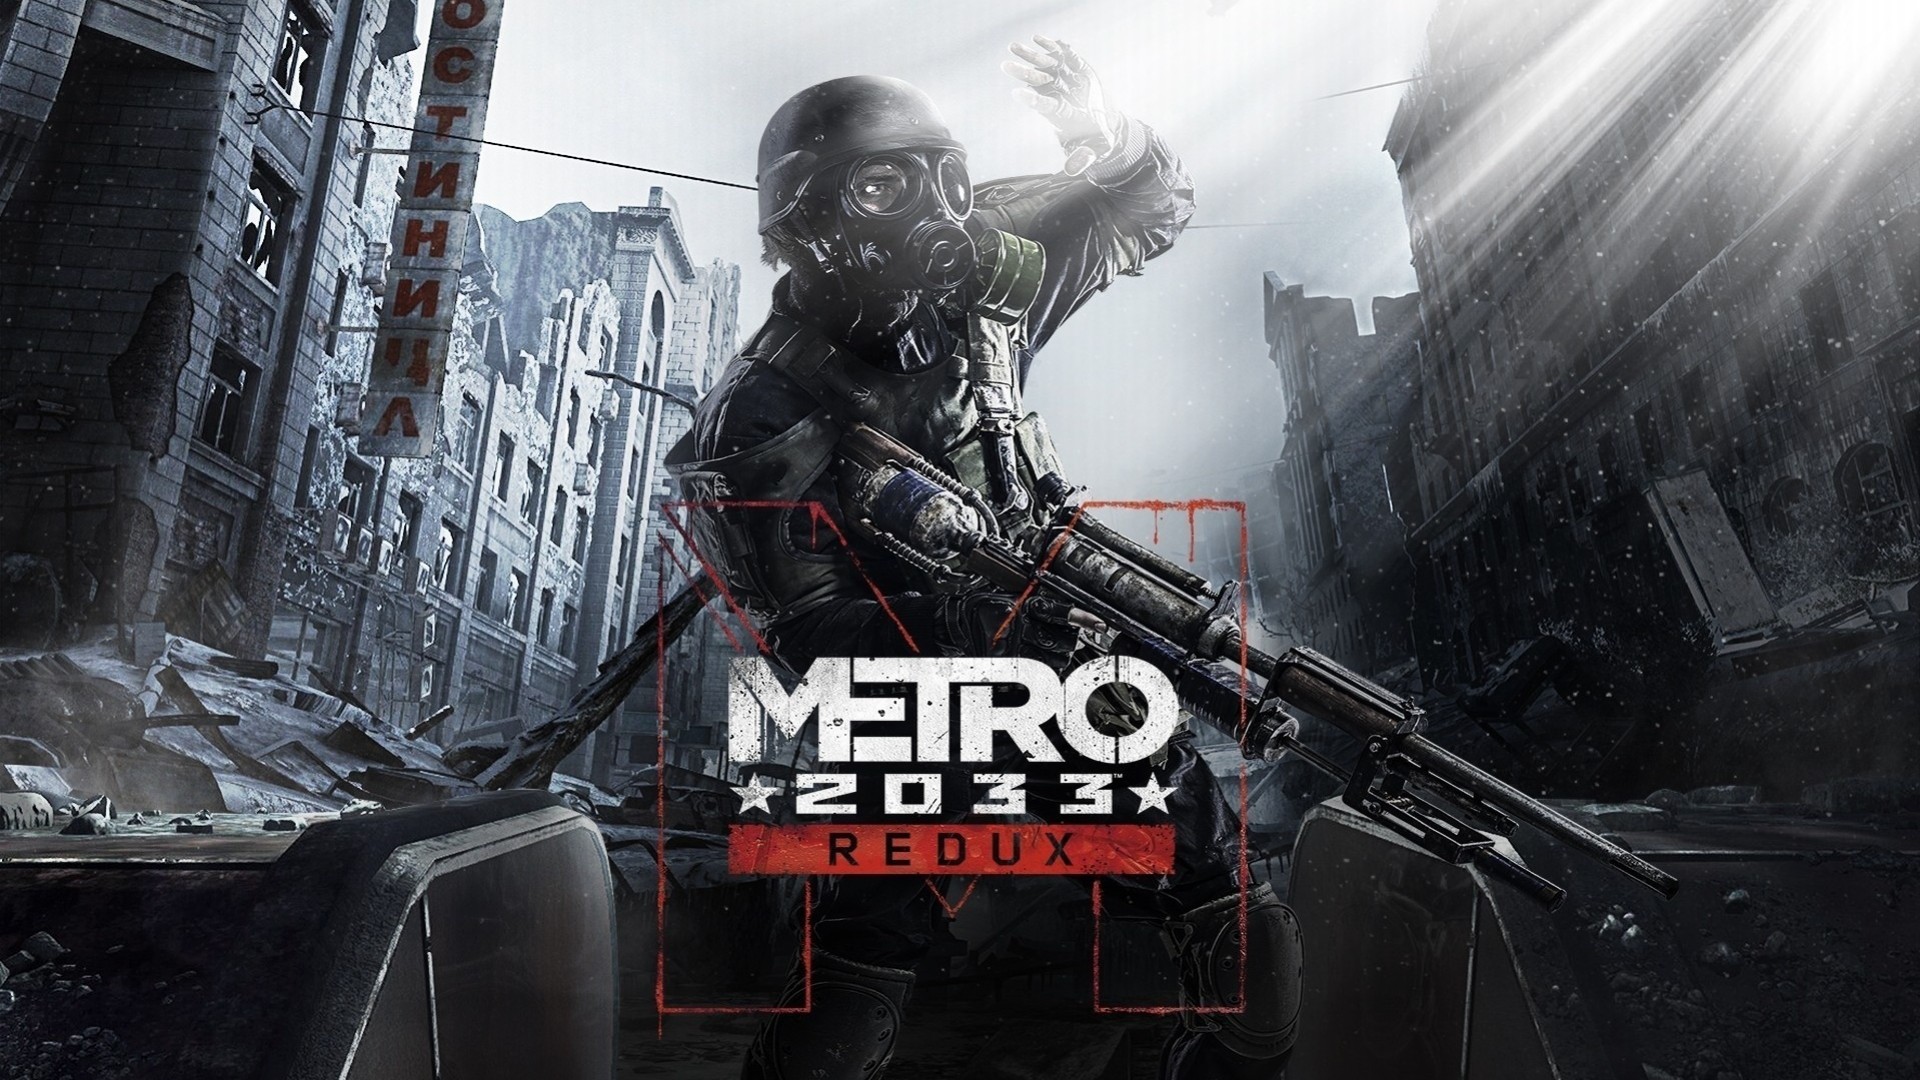 Metro 2033 Redux #2 - самое главное патроны